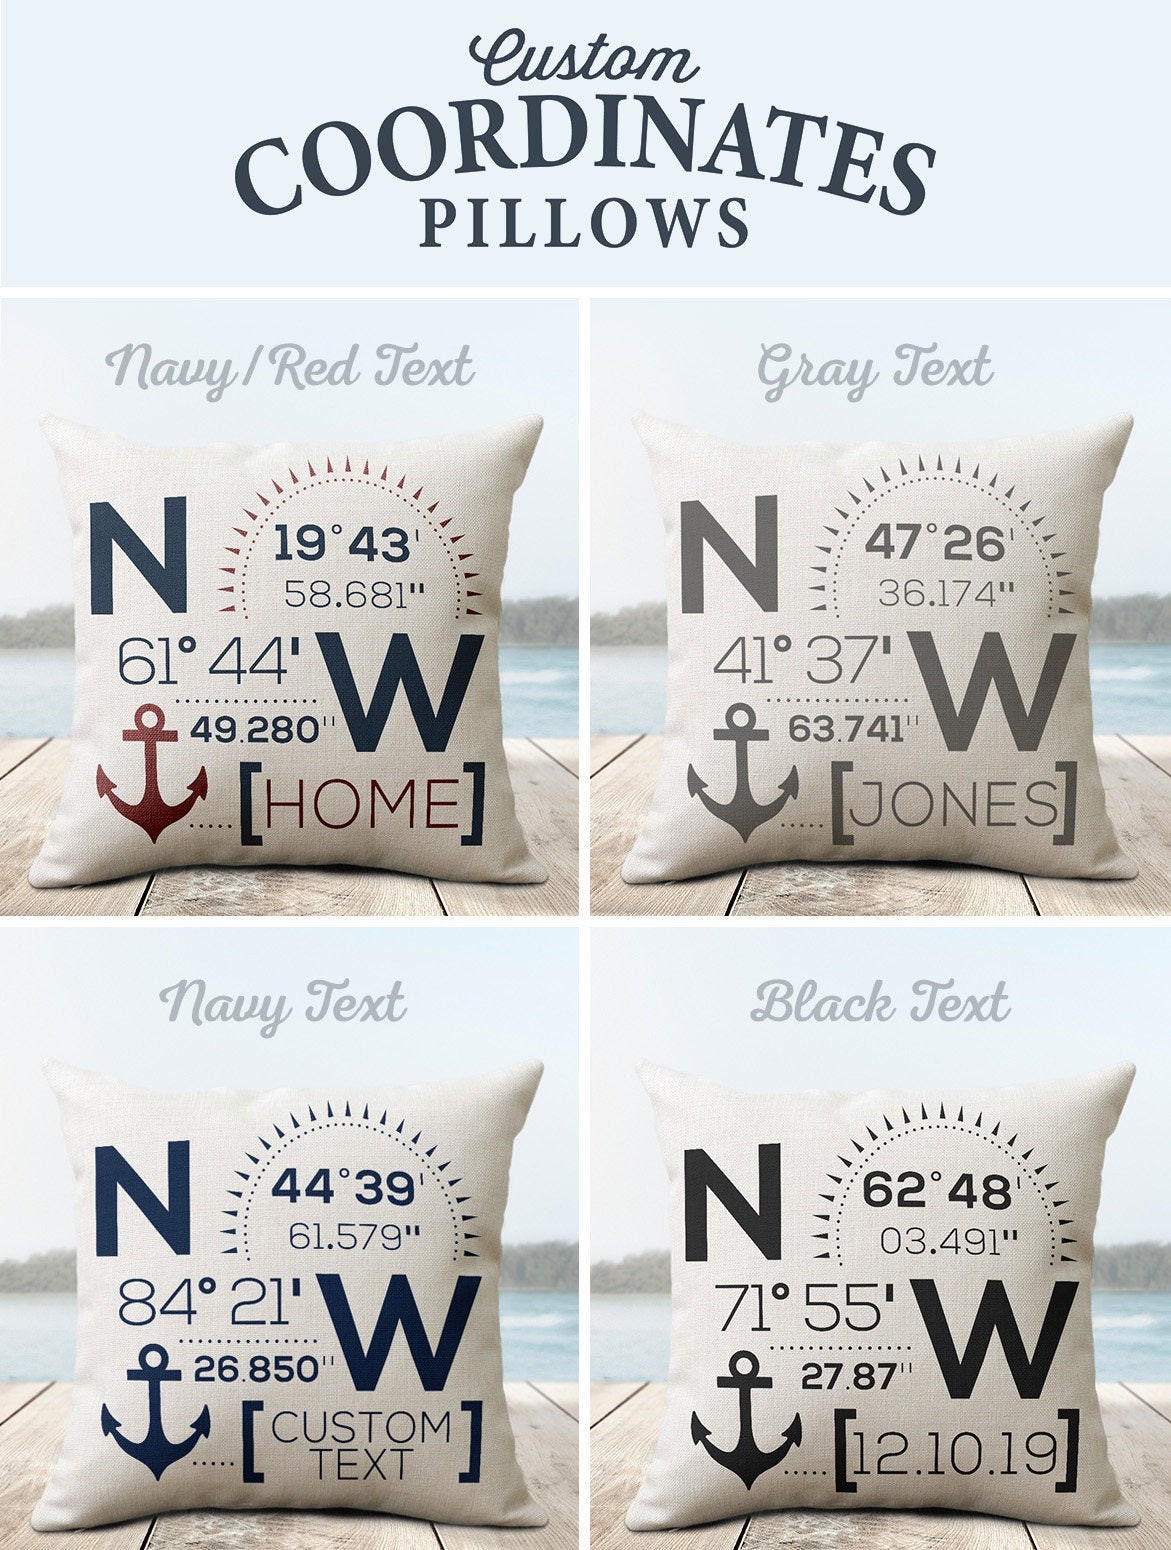 Fennco Styles Nautical Design Decorative Throw Pillow - Navy Blue Cotton  Coastal Pillow for Home, Couch, Living Room, Bedroom, Beach House Décor